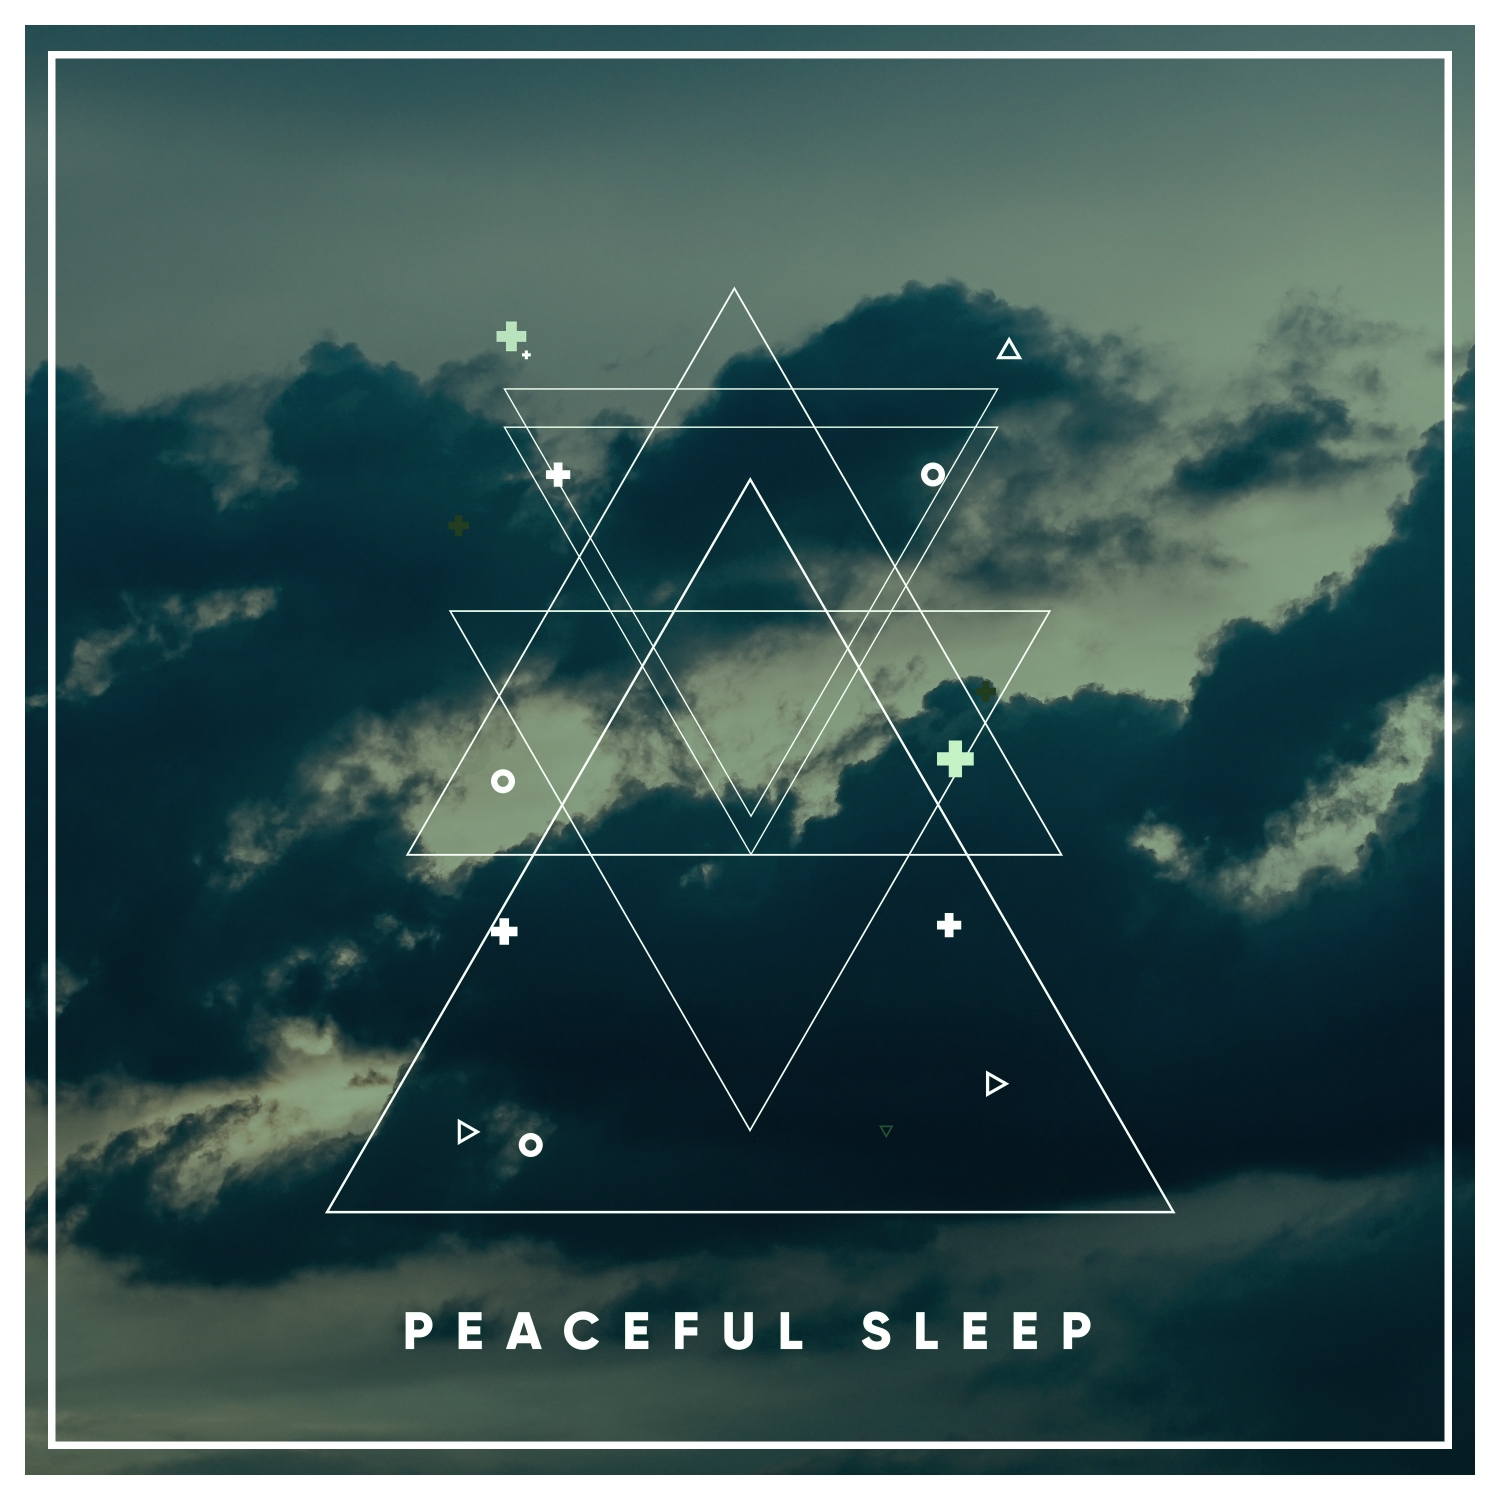 A Peaceful Night's Sleep: 9 Loopable Rain Sounds for Insomnia